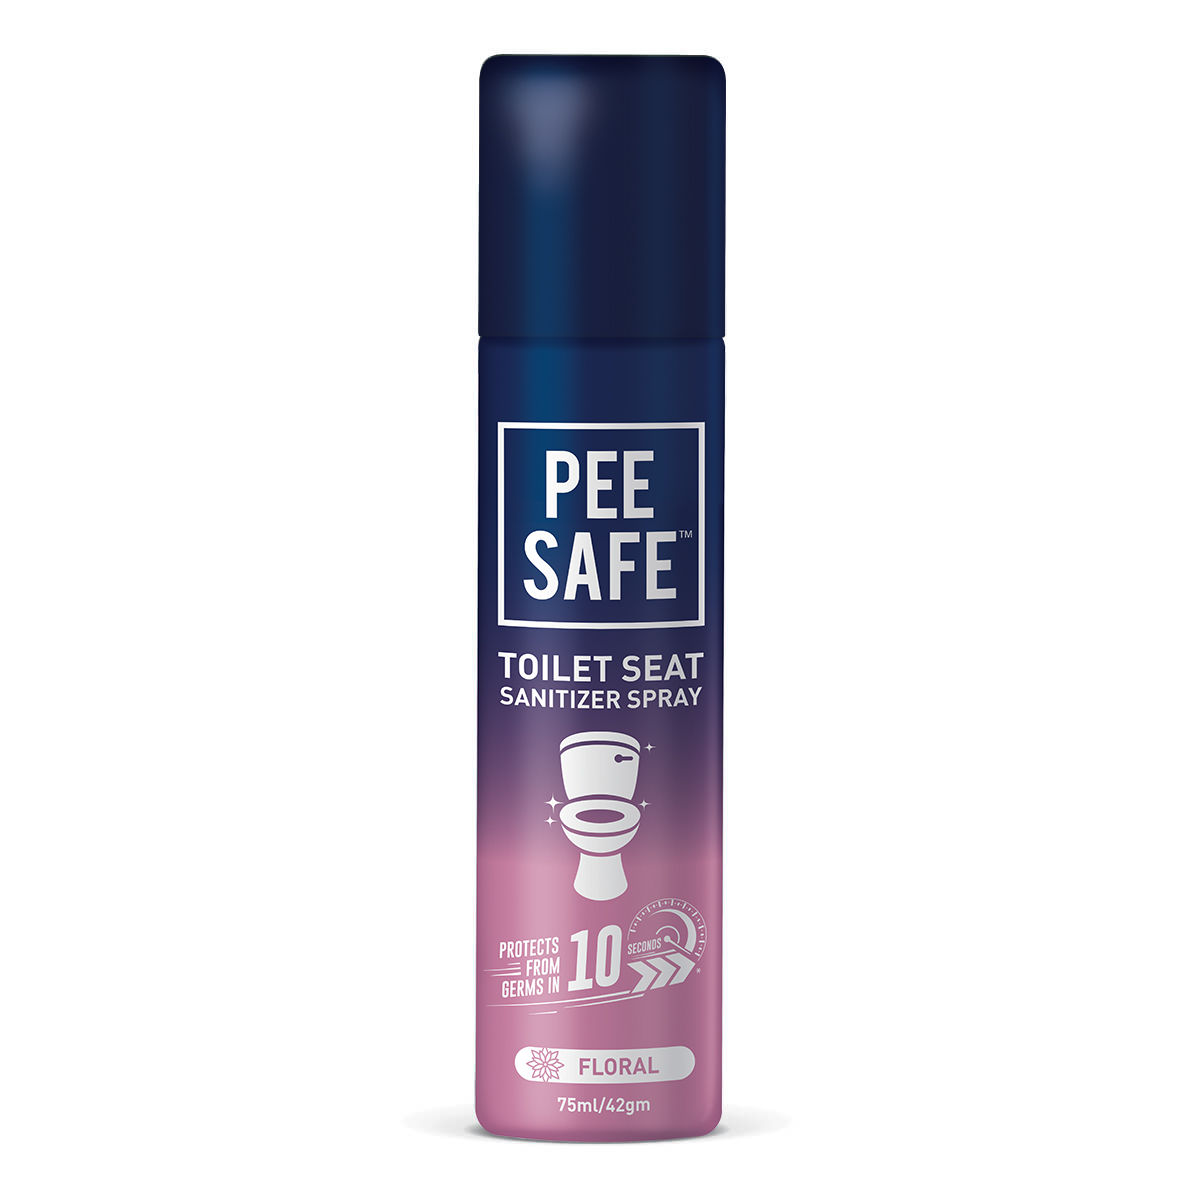 Pee Safe Toilet Seat Sanitizer Floral Spray, 75 ml, Pack of 1 